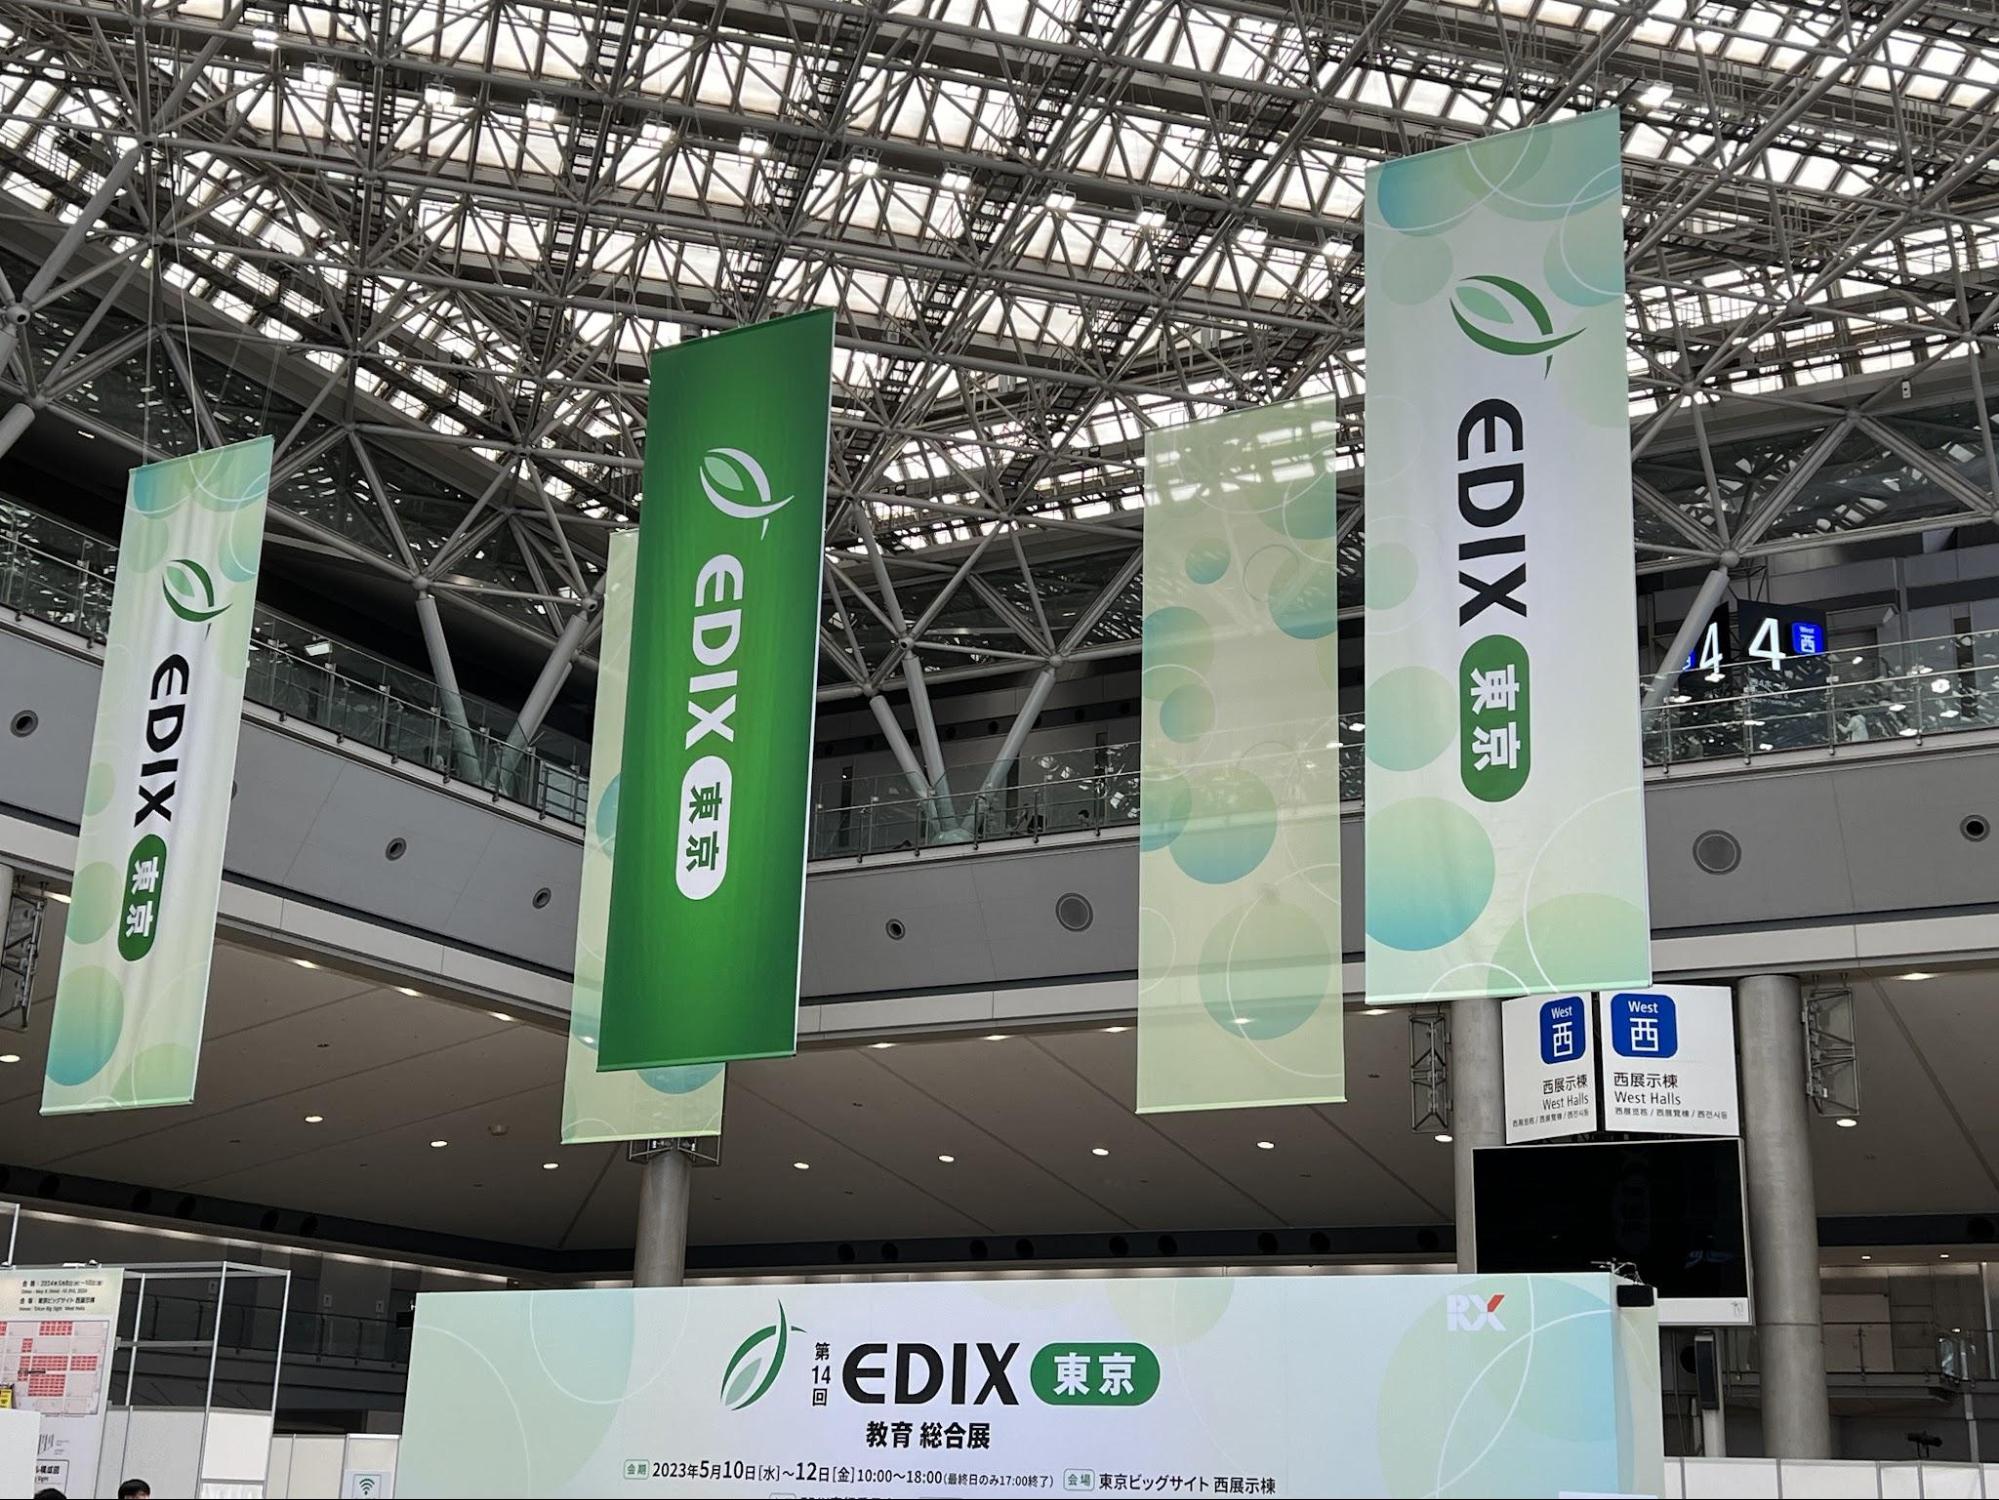 「EDIX東京」と書かれた垂れ幕が下りている受付の写真